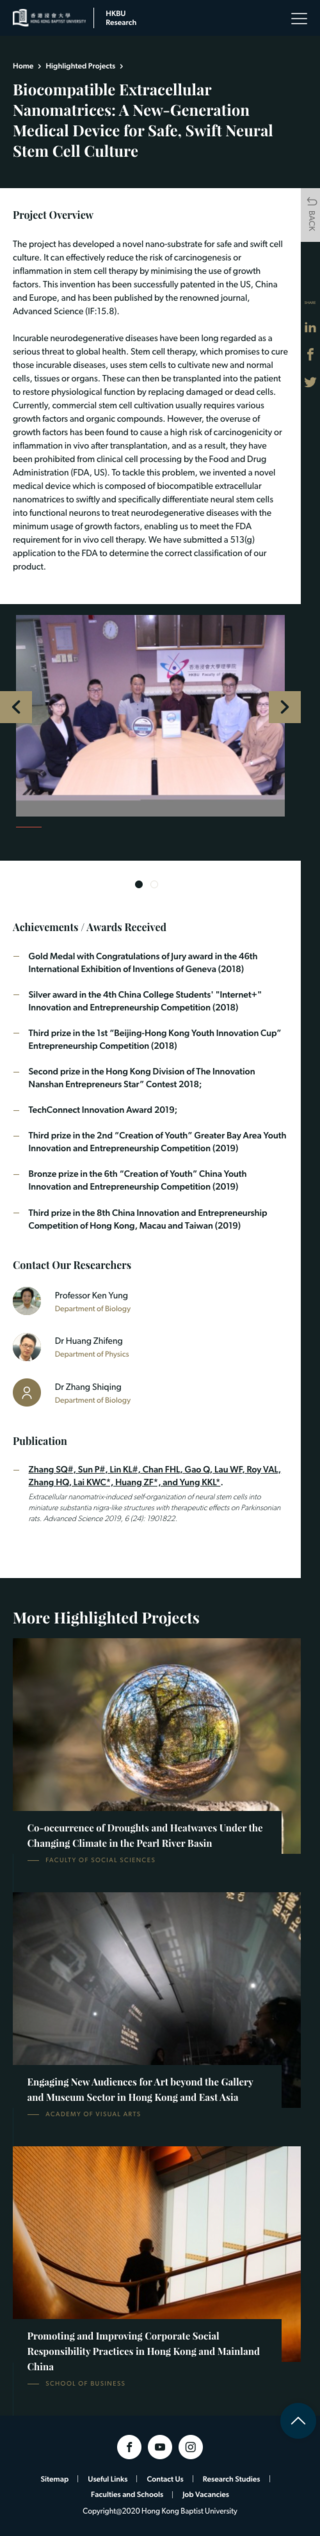 Hong Kong Baptist University website screenshot for mobile version 4 of 5